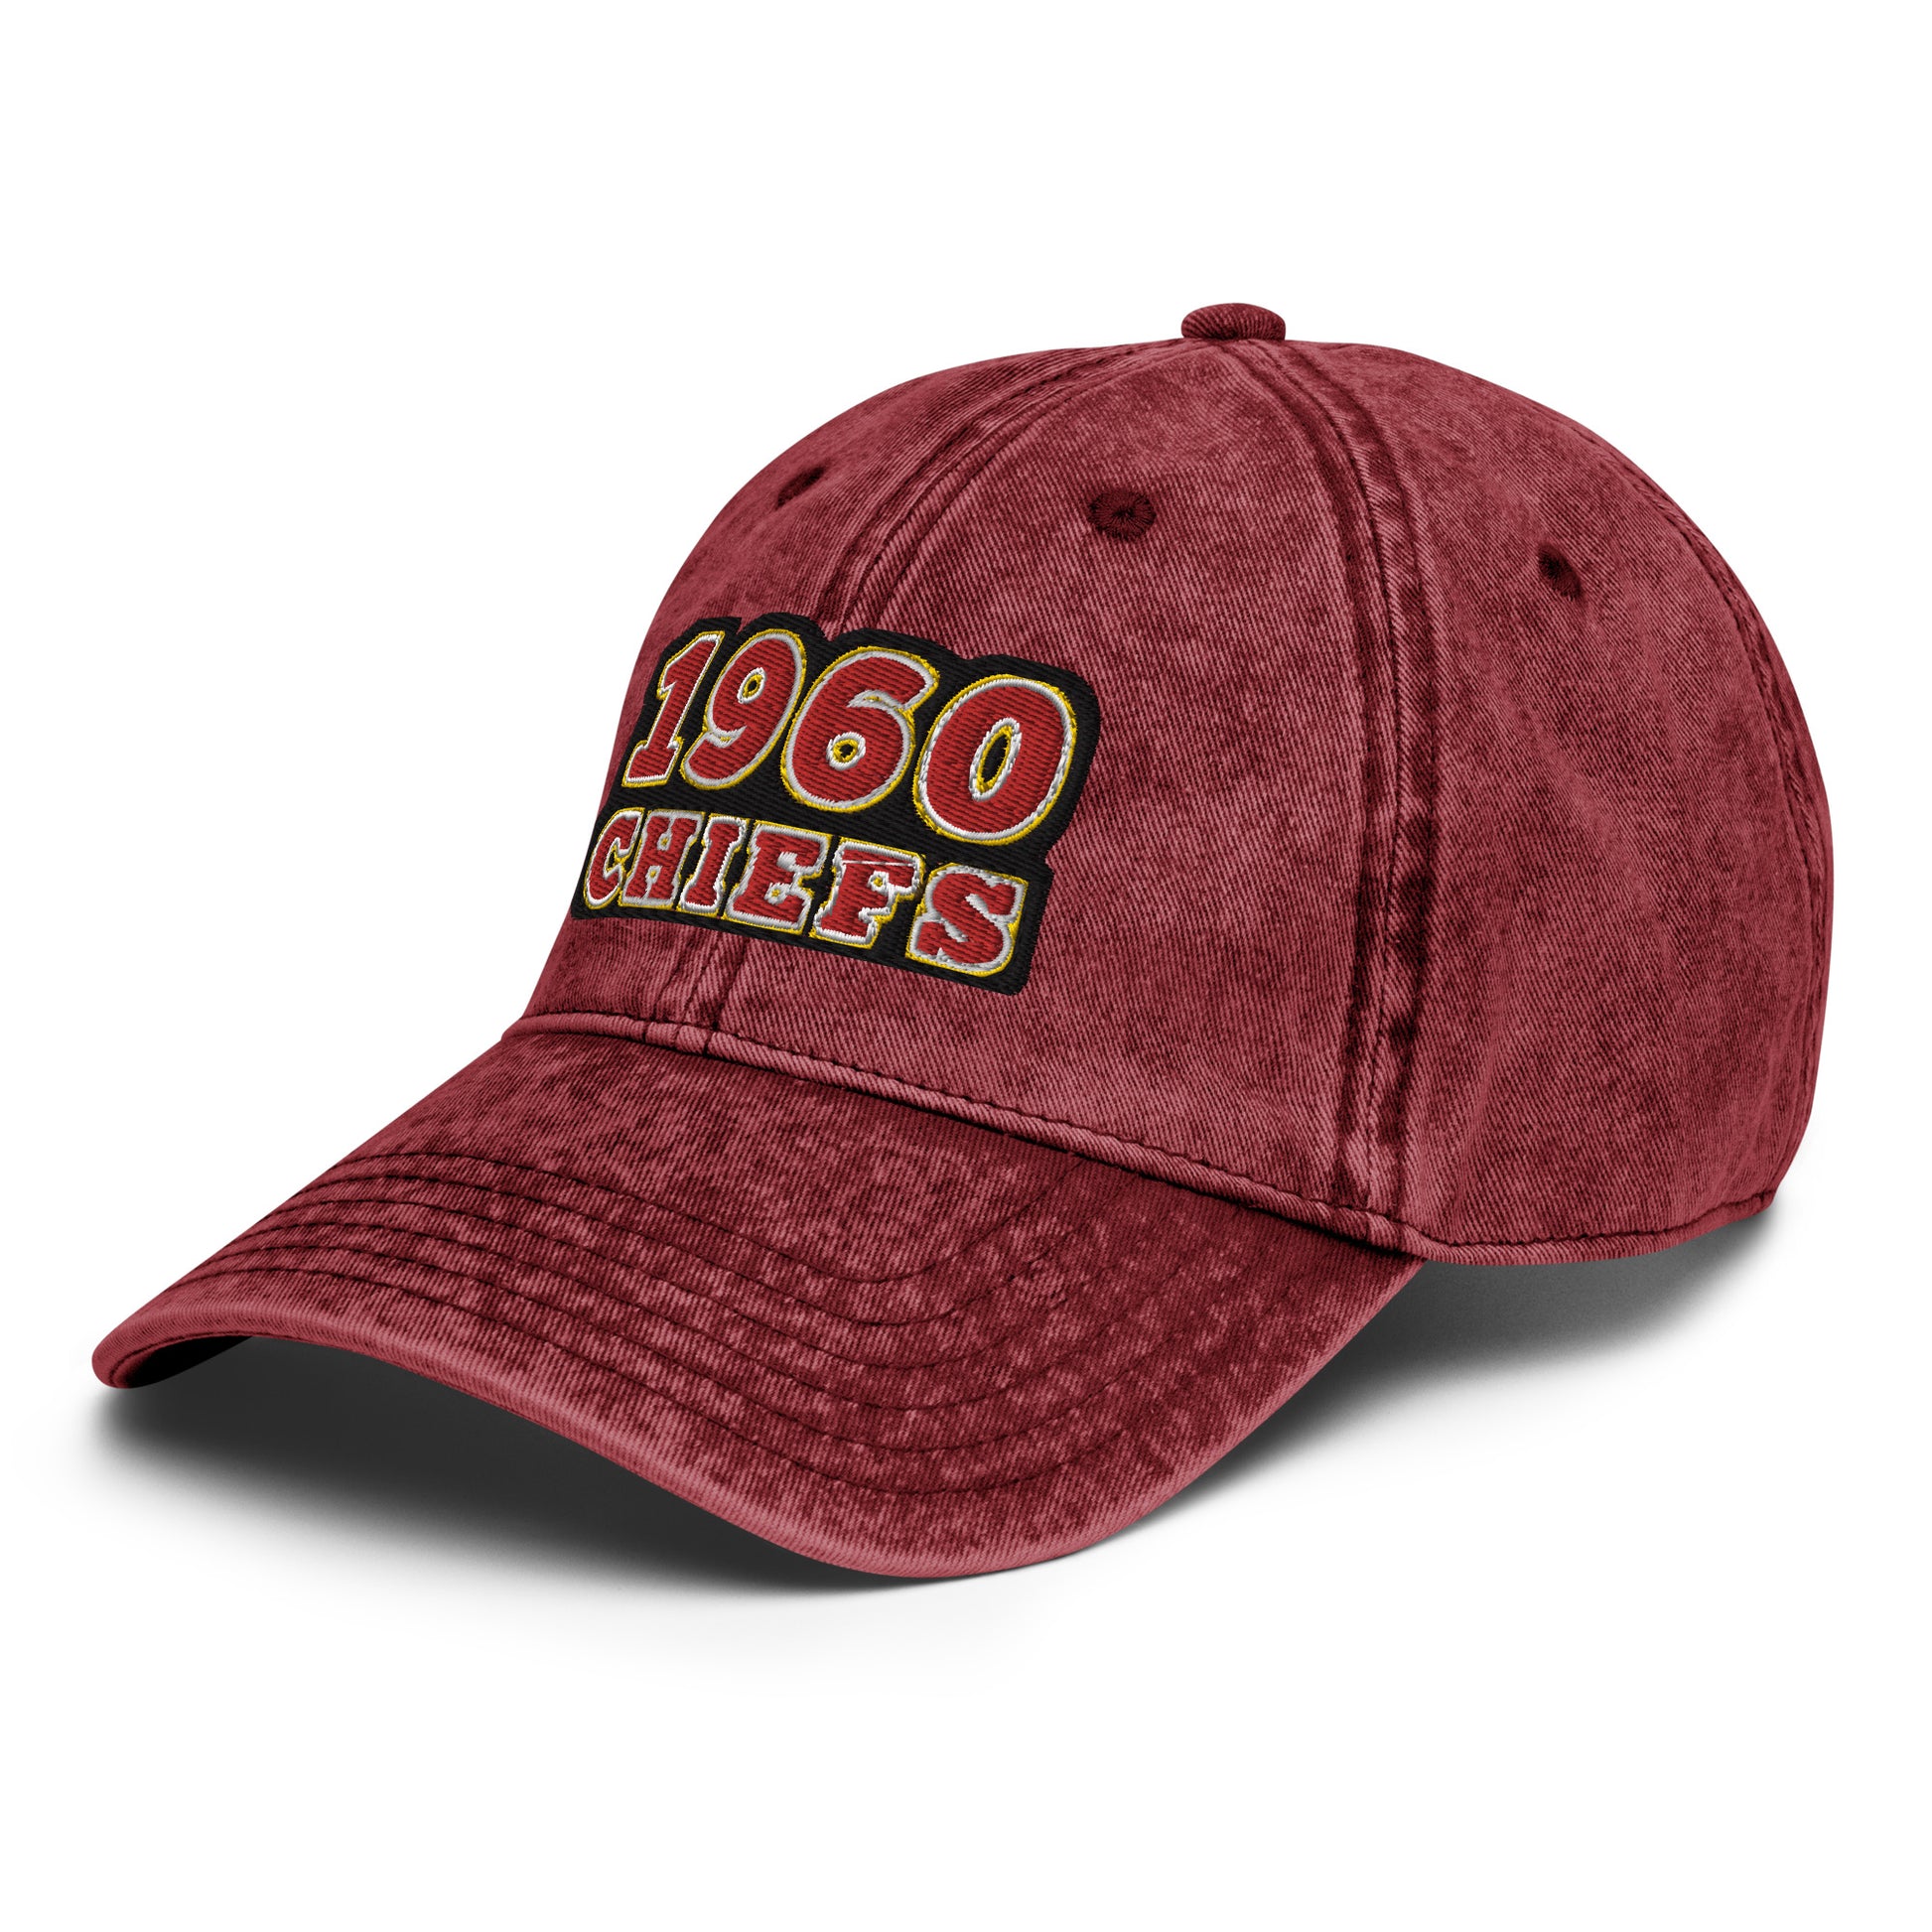 Kansas City Hat / Chiefs Hat / Kansas City Chiefs Vintage Cap Maroon